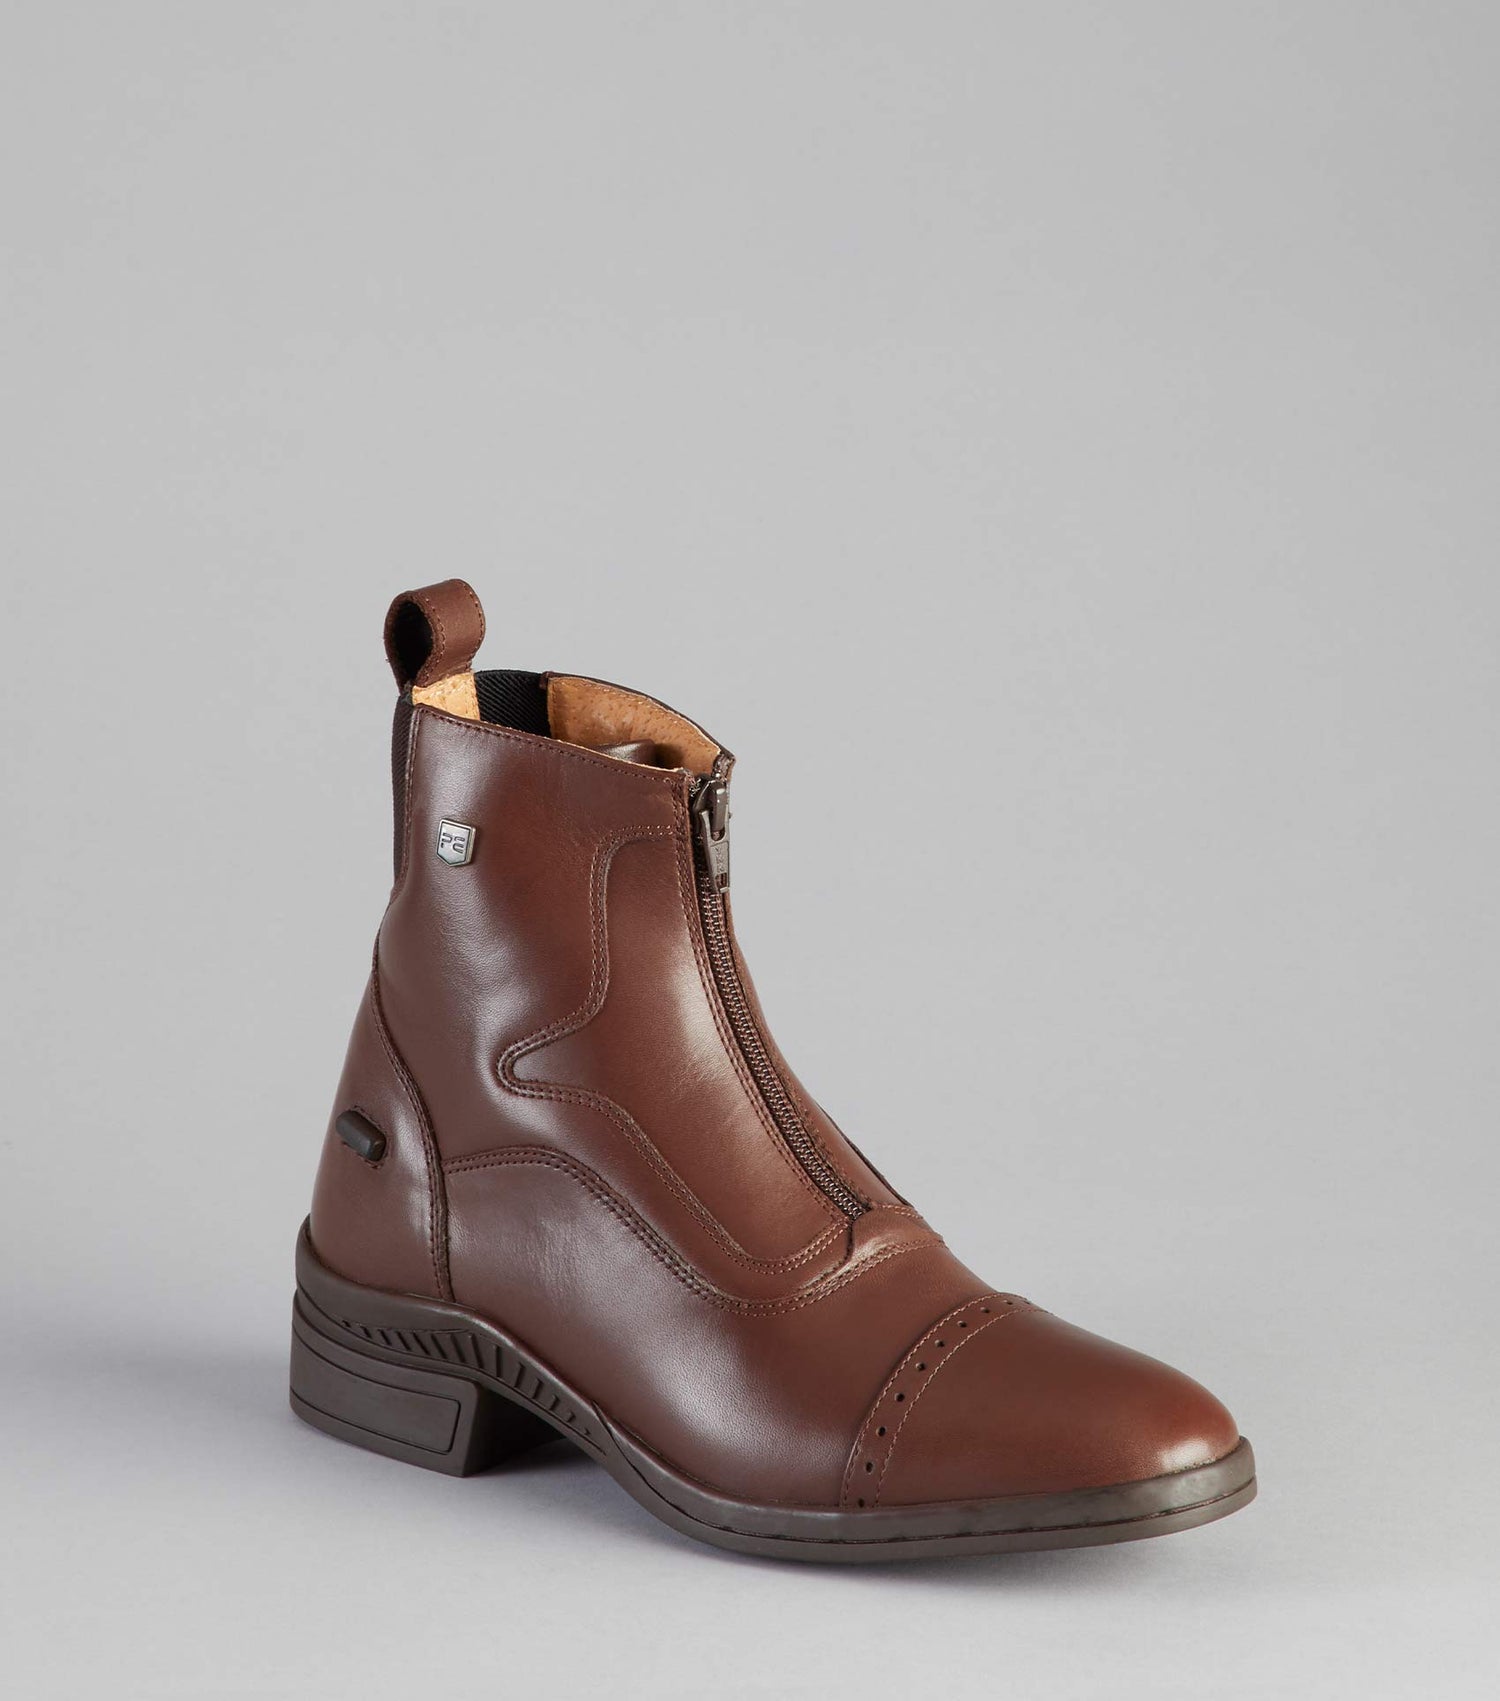 Description:Loxley Ladies Leather Paddock/Riding Boots_Colour:Brown_Position:1